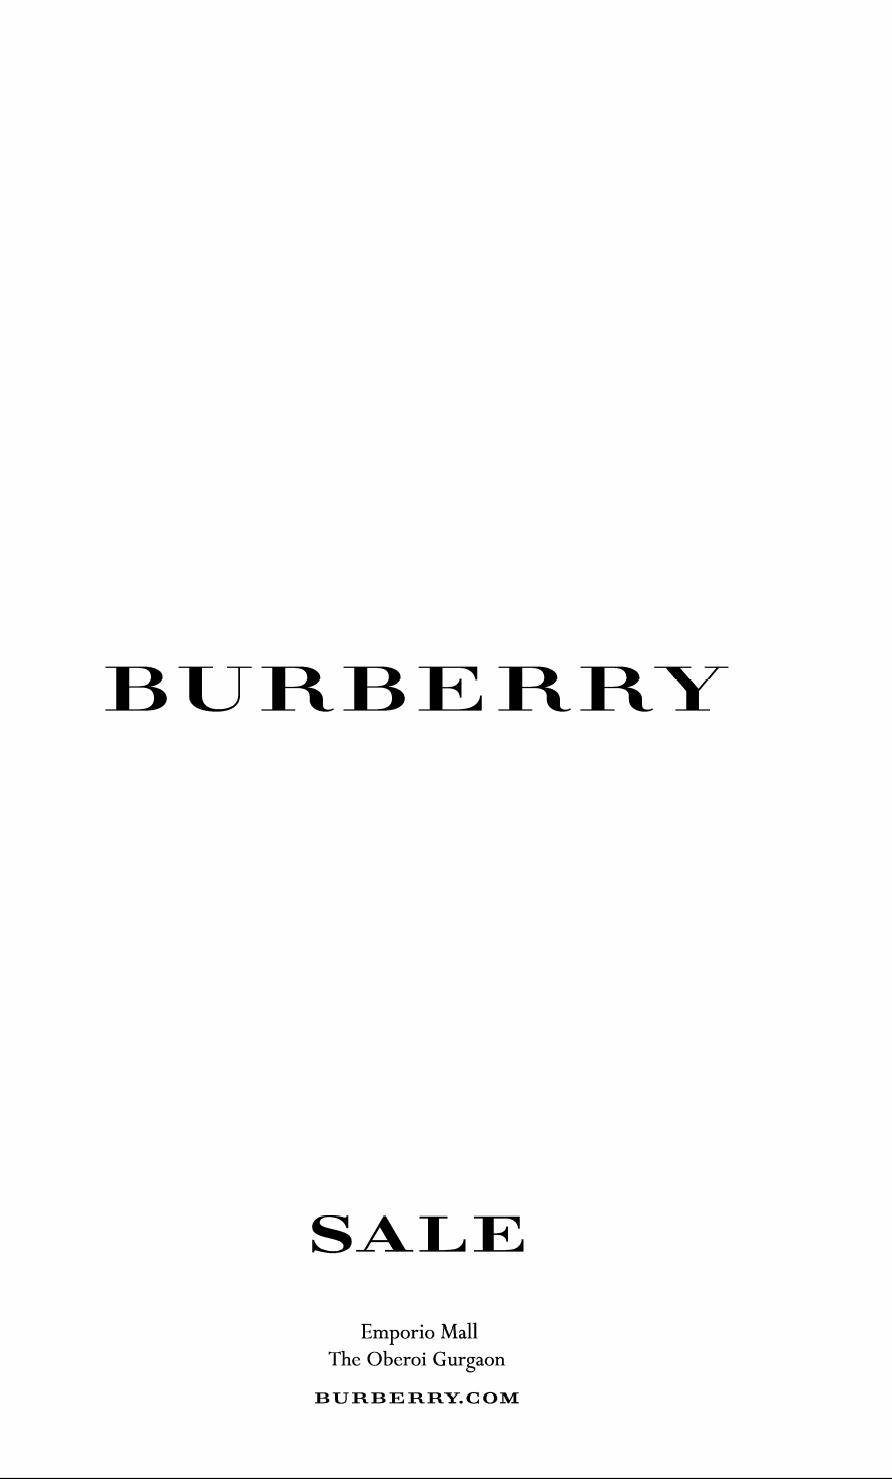 burberry sale